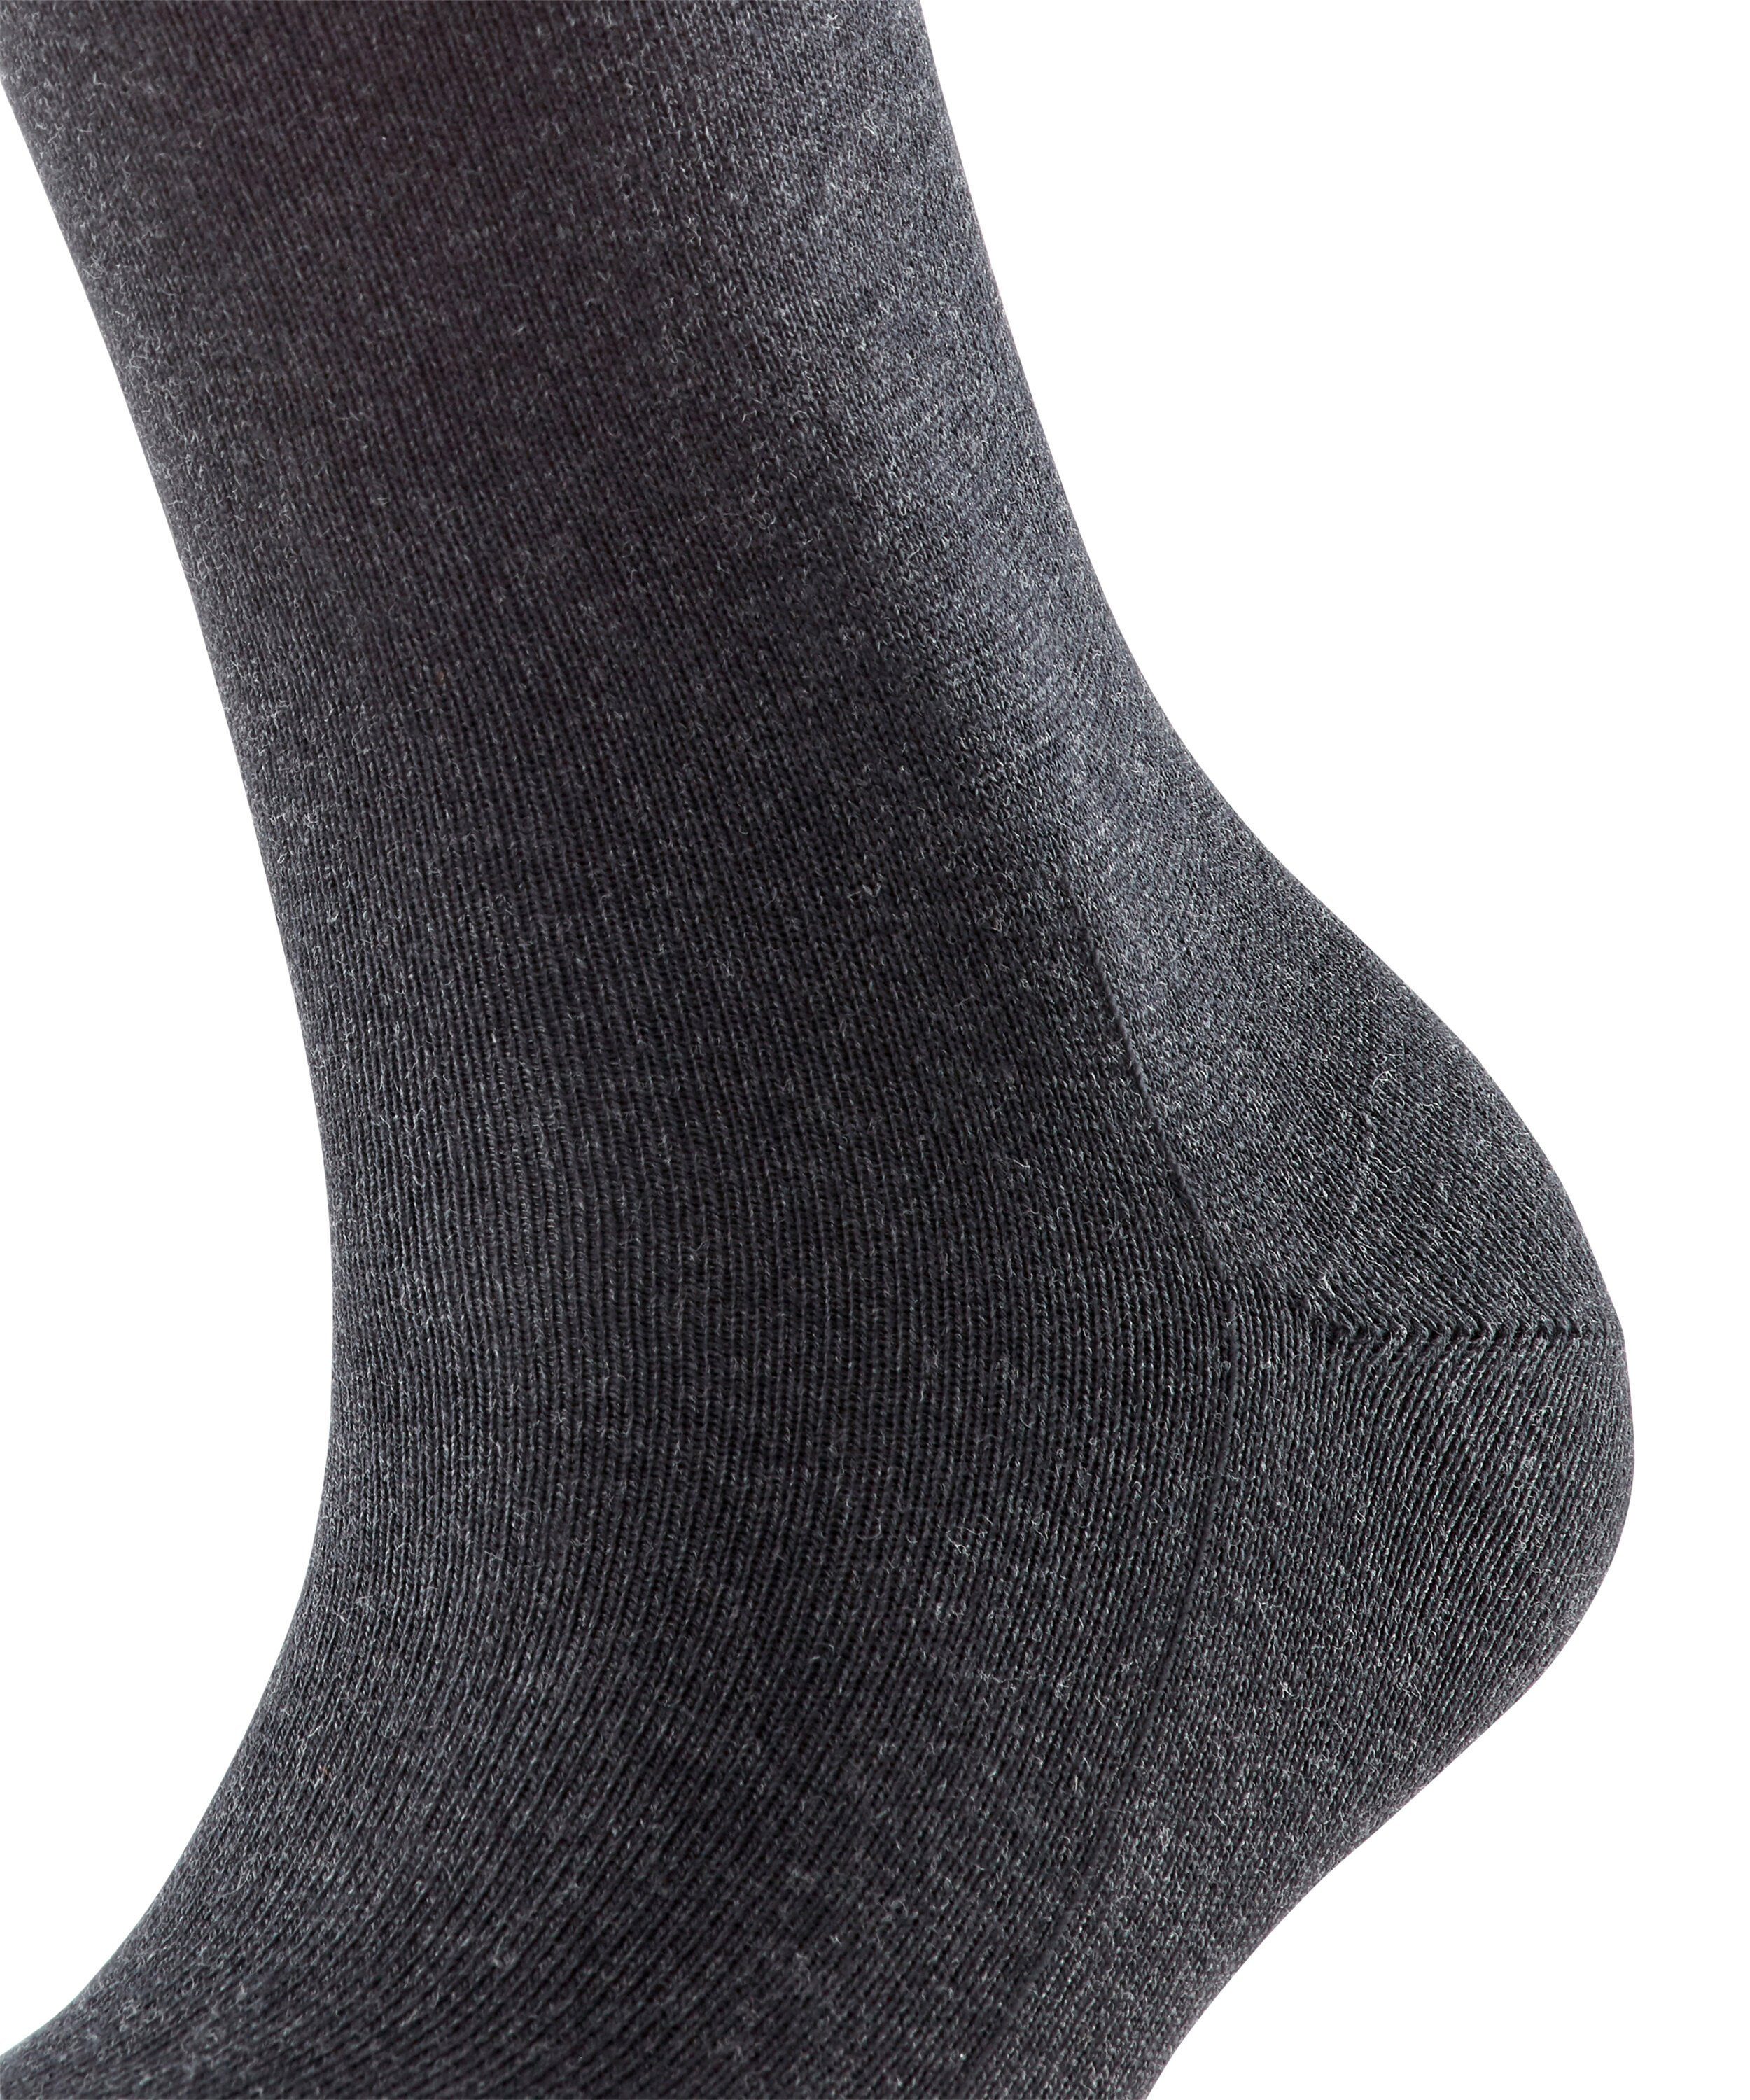 (3089) (1-Paar) Family Socken anthra.mel FALKE